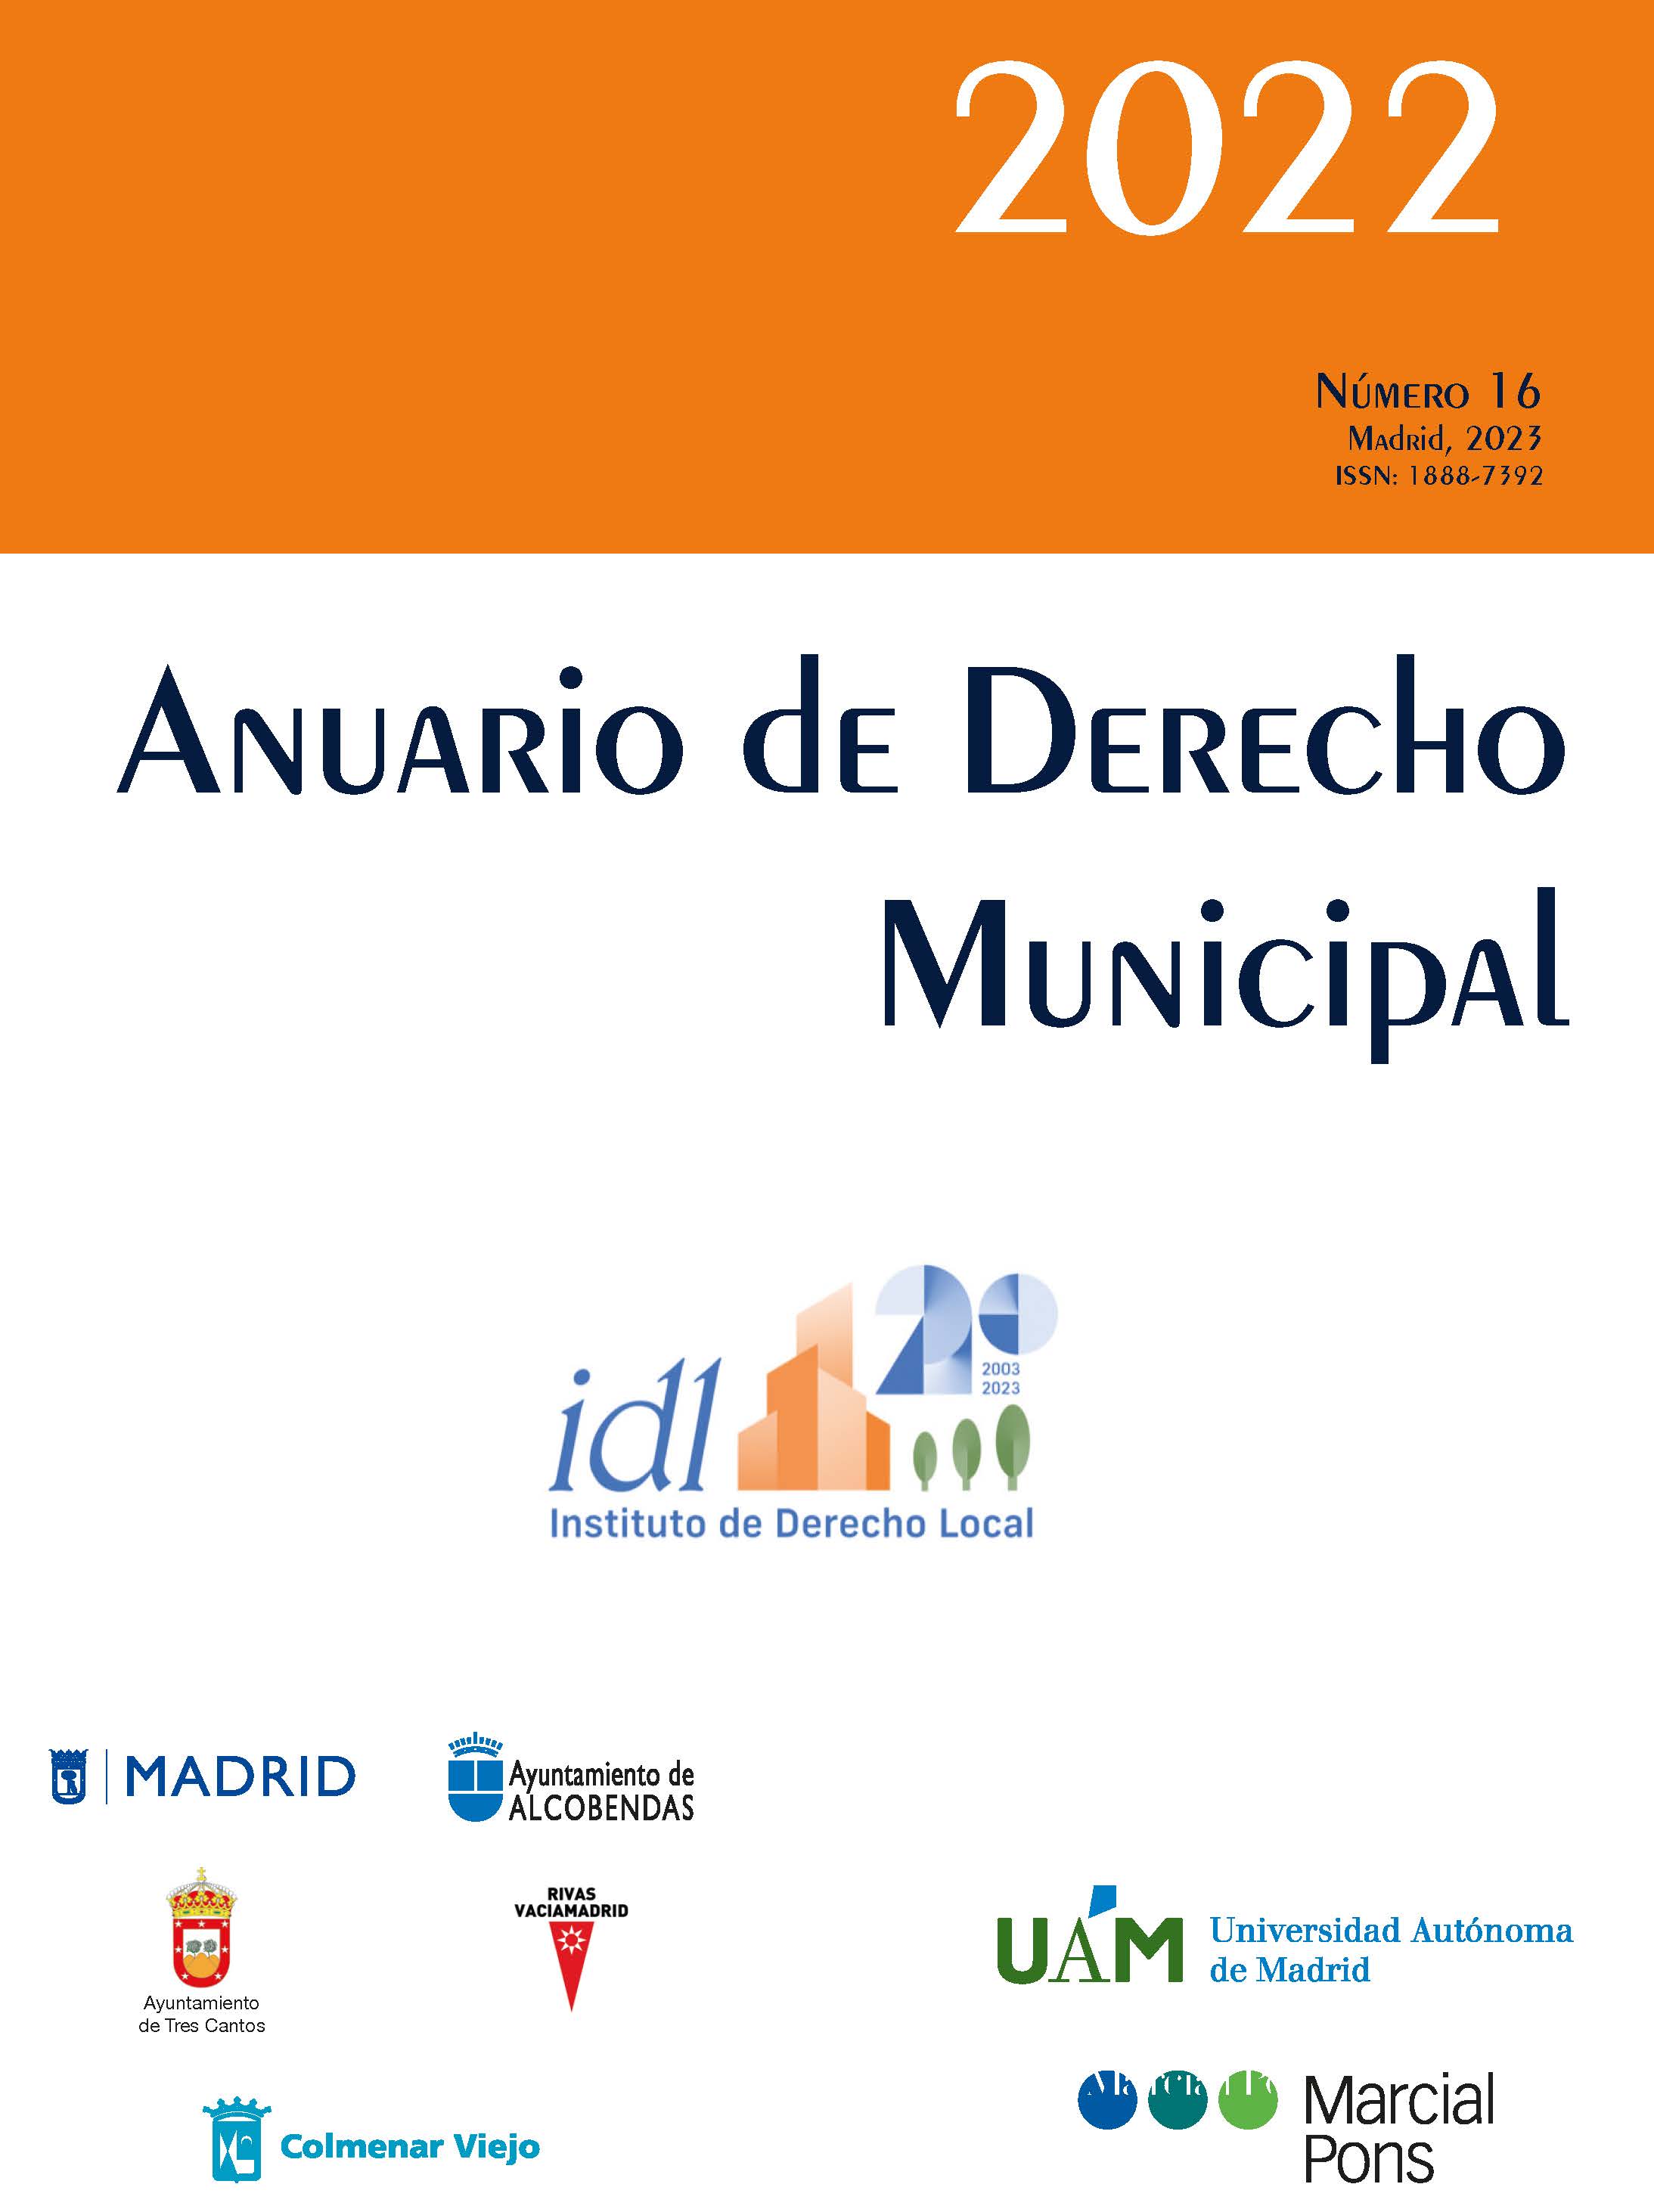 Anuario de Derecho Municipal, Nº 16, año 2022